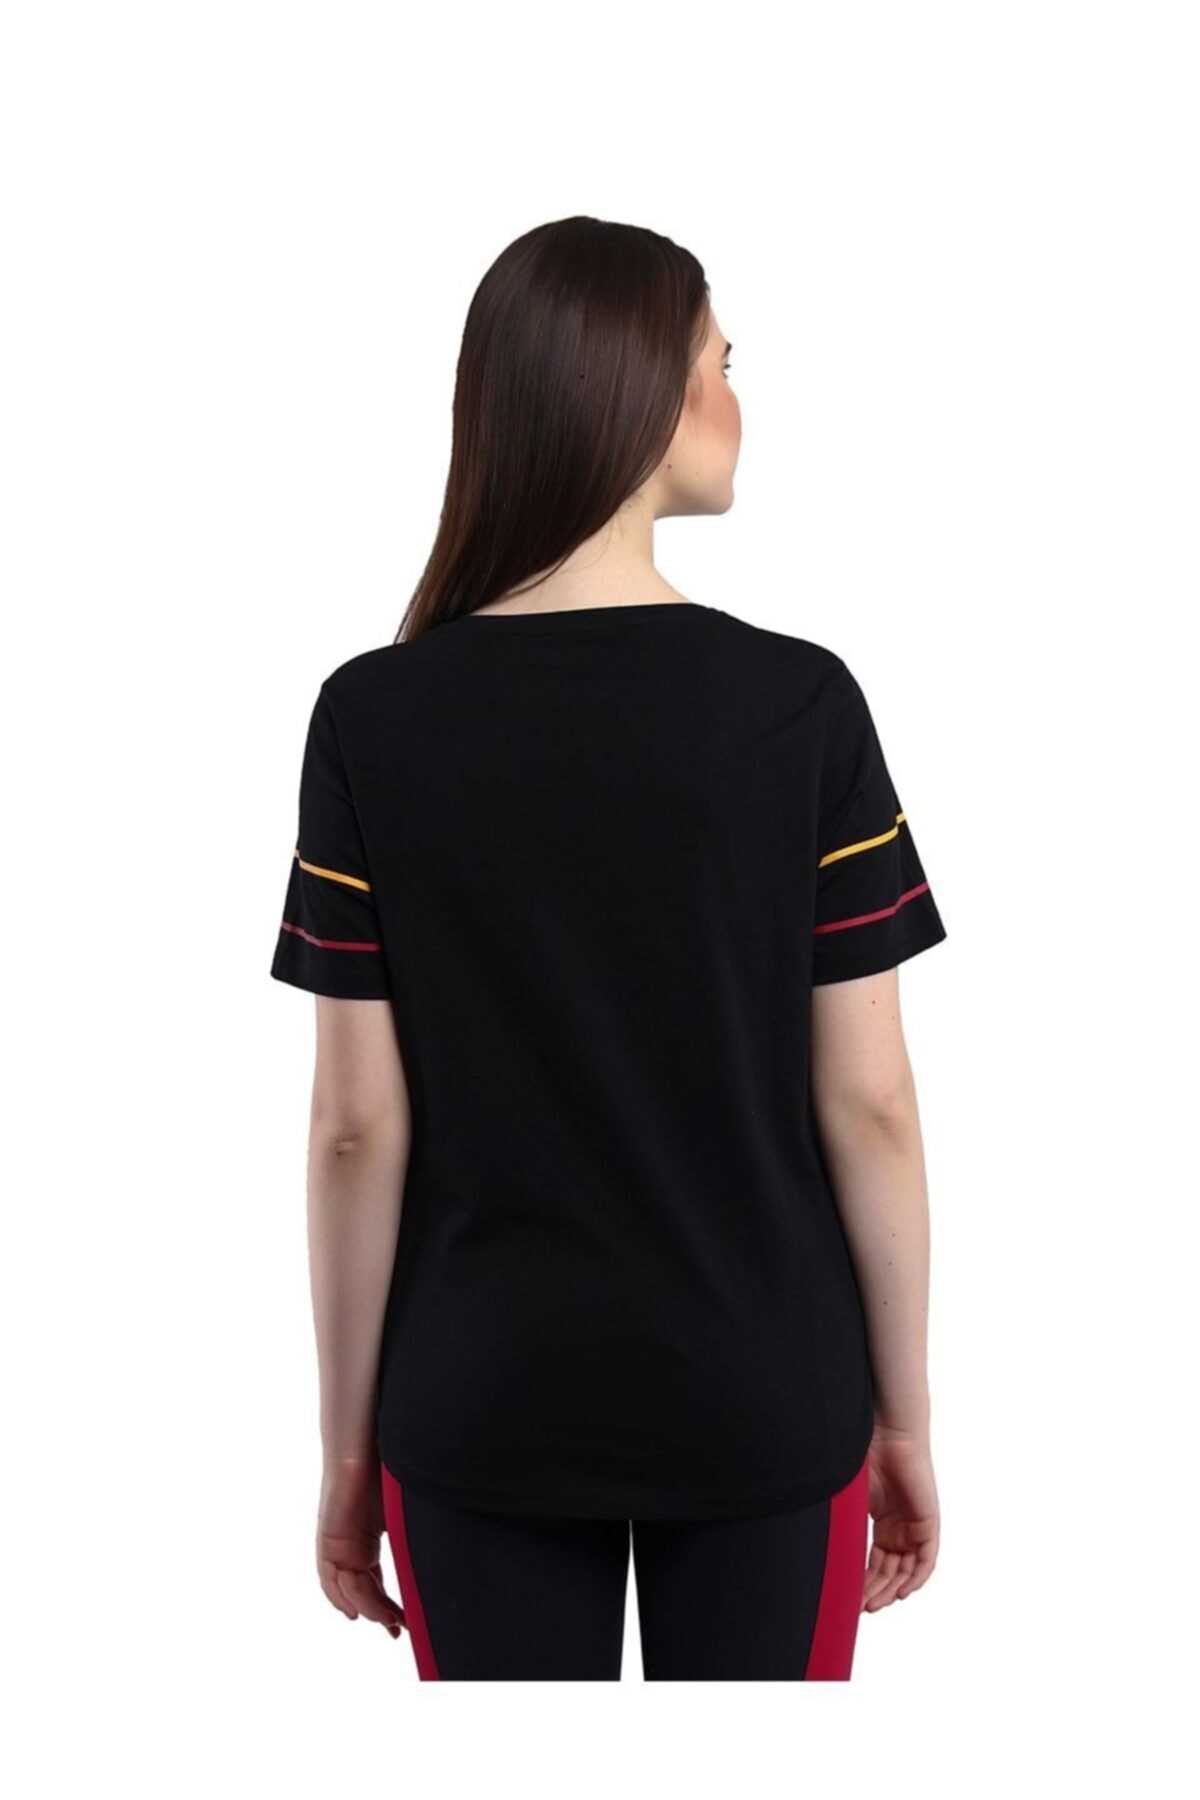 خرید انلاین تیشرت ورزشی زنانه خاص برند Galatasaray رنگ مشکی کد ty120187289